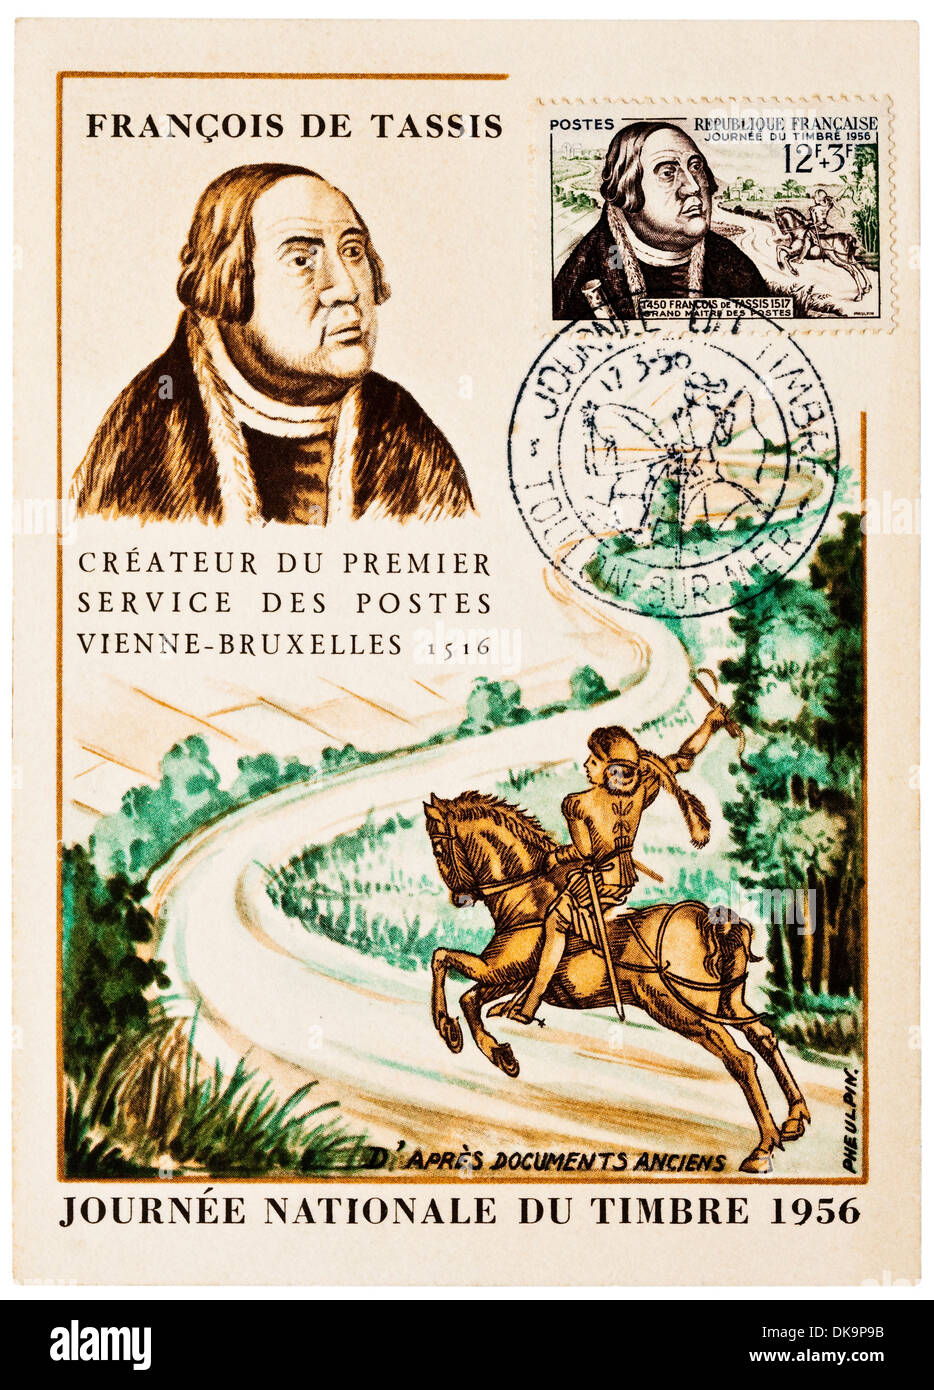 1956 French postcard depicting Francois de Tassis, 1516 - "Journée du Timbre" (Stamp Day). Stock Photo